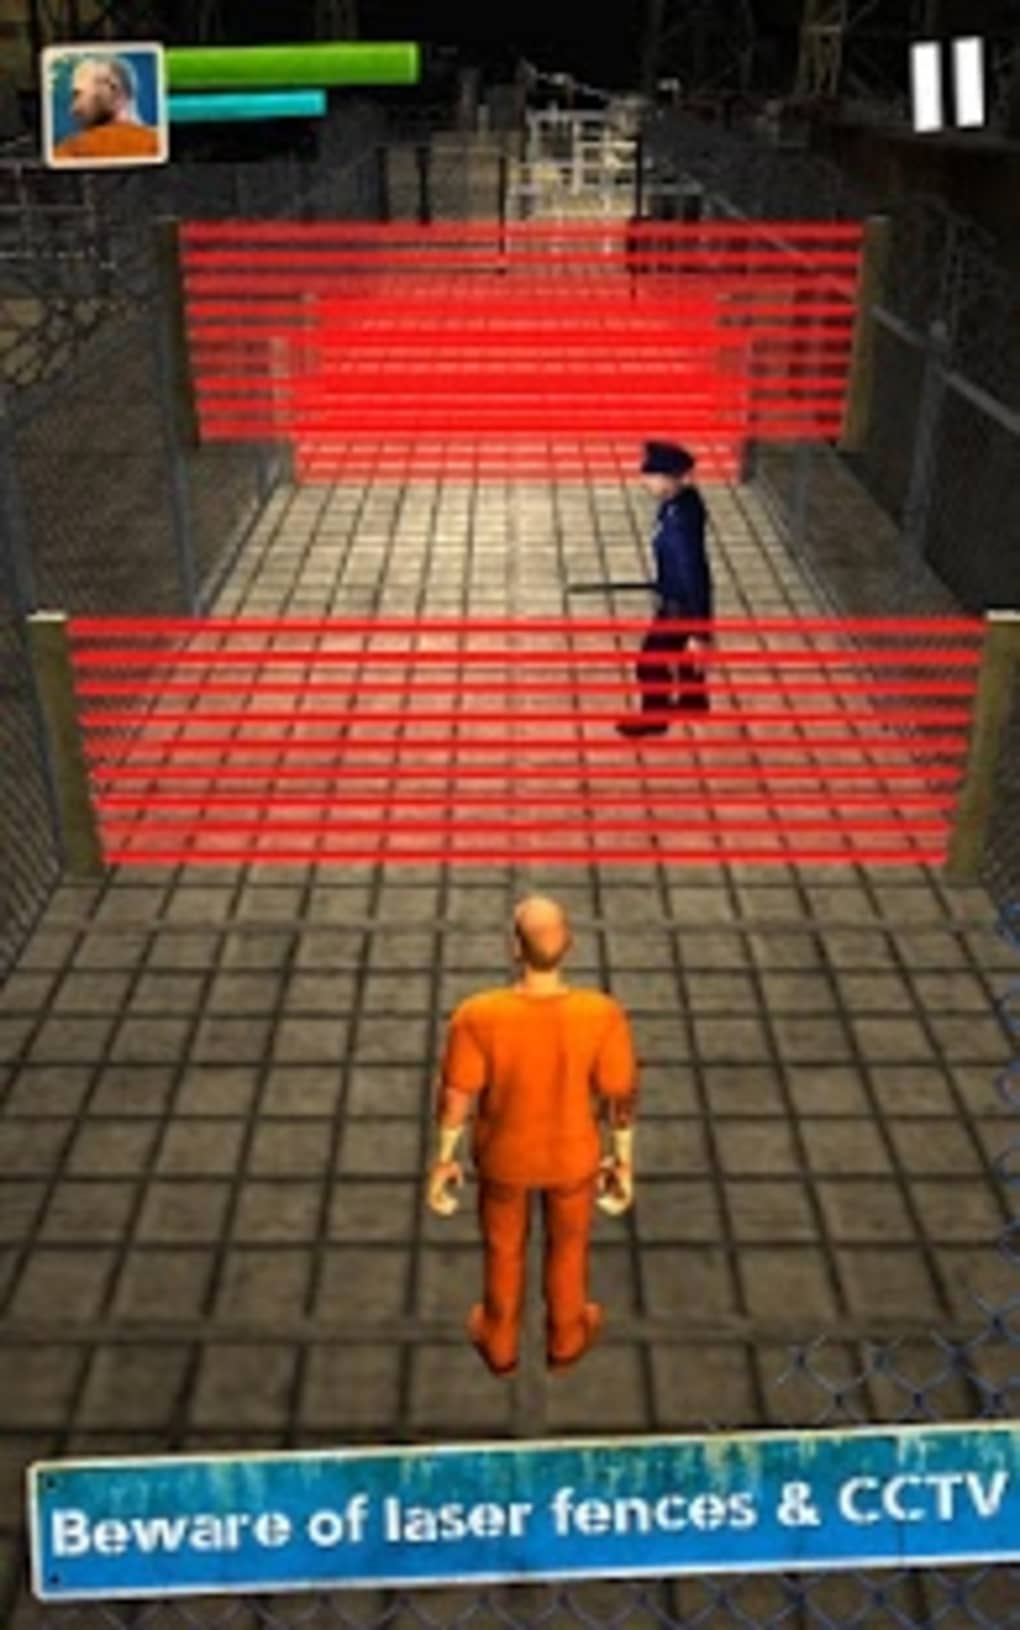 Escape Game: Prison Adventure APK Download for Android Free